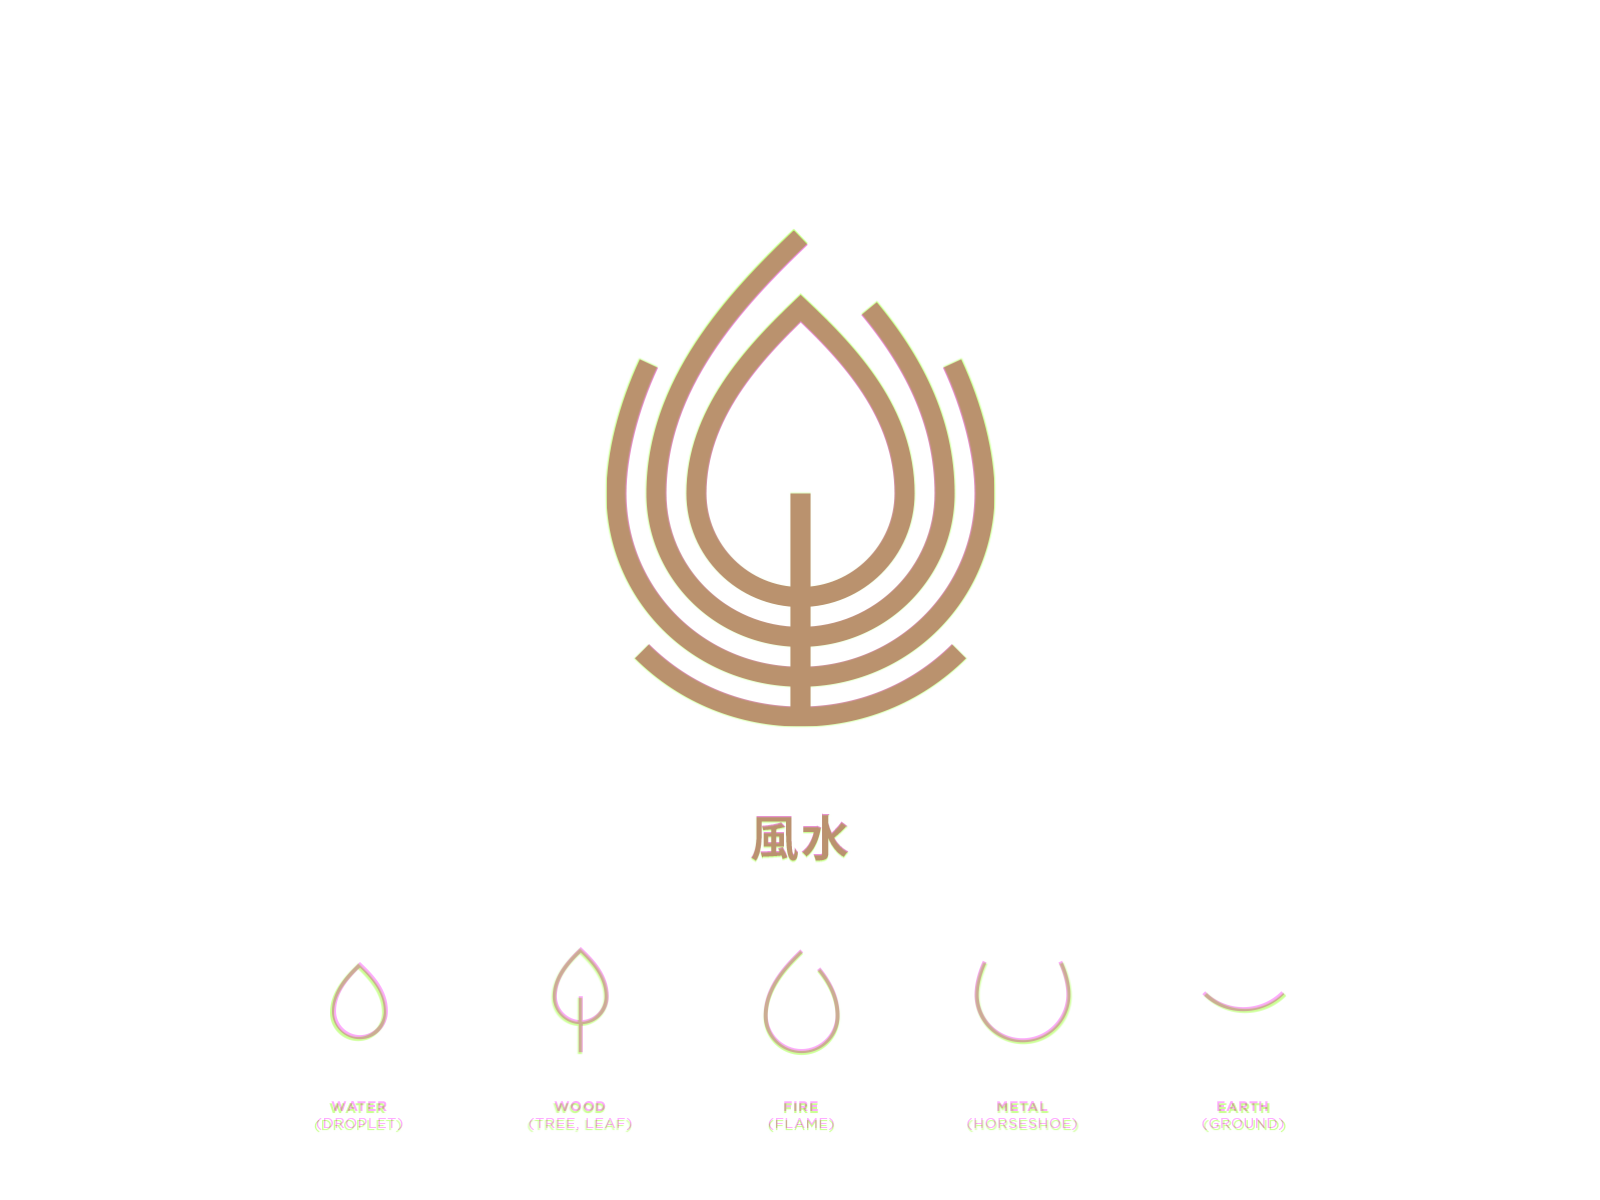 feng shui logo design